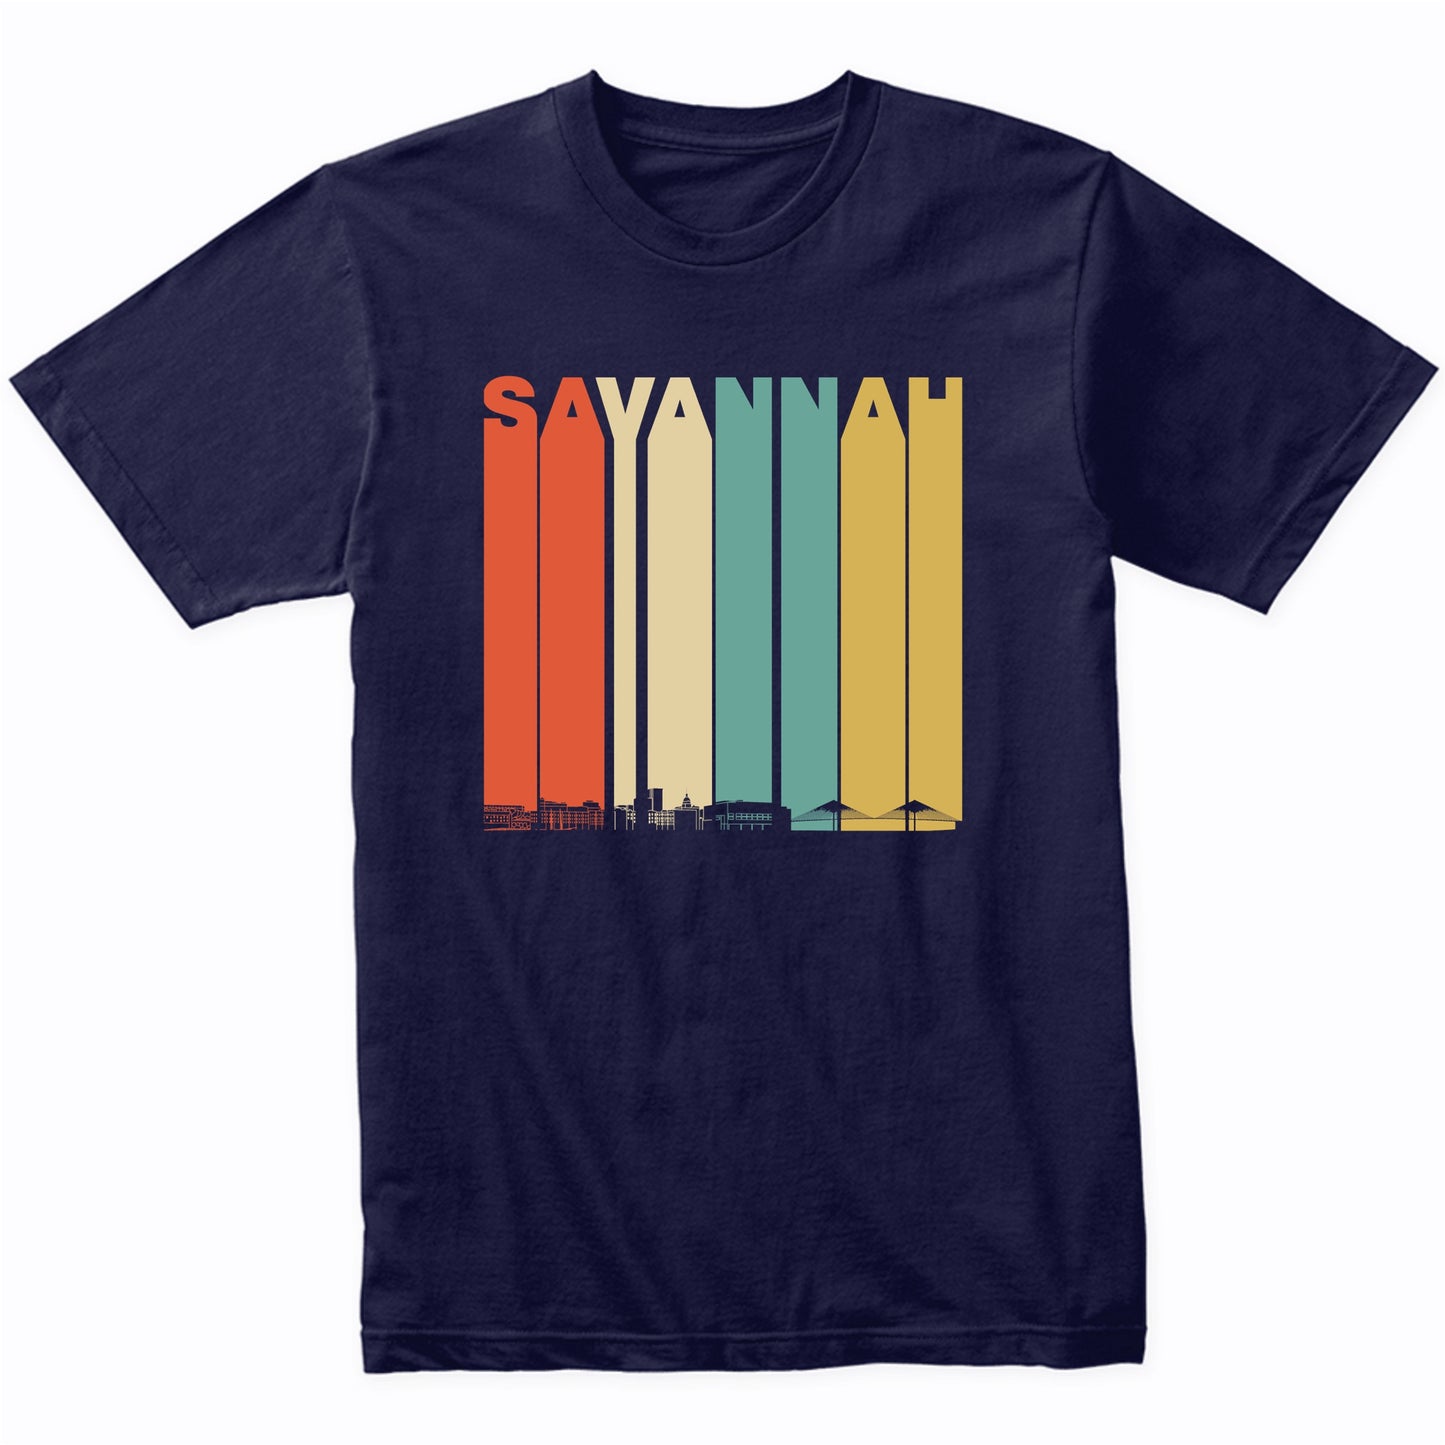 Vintage 1970's Style Savannah Georgia Skyline T-Shirt